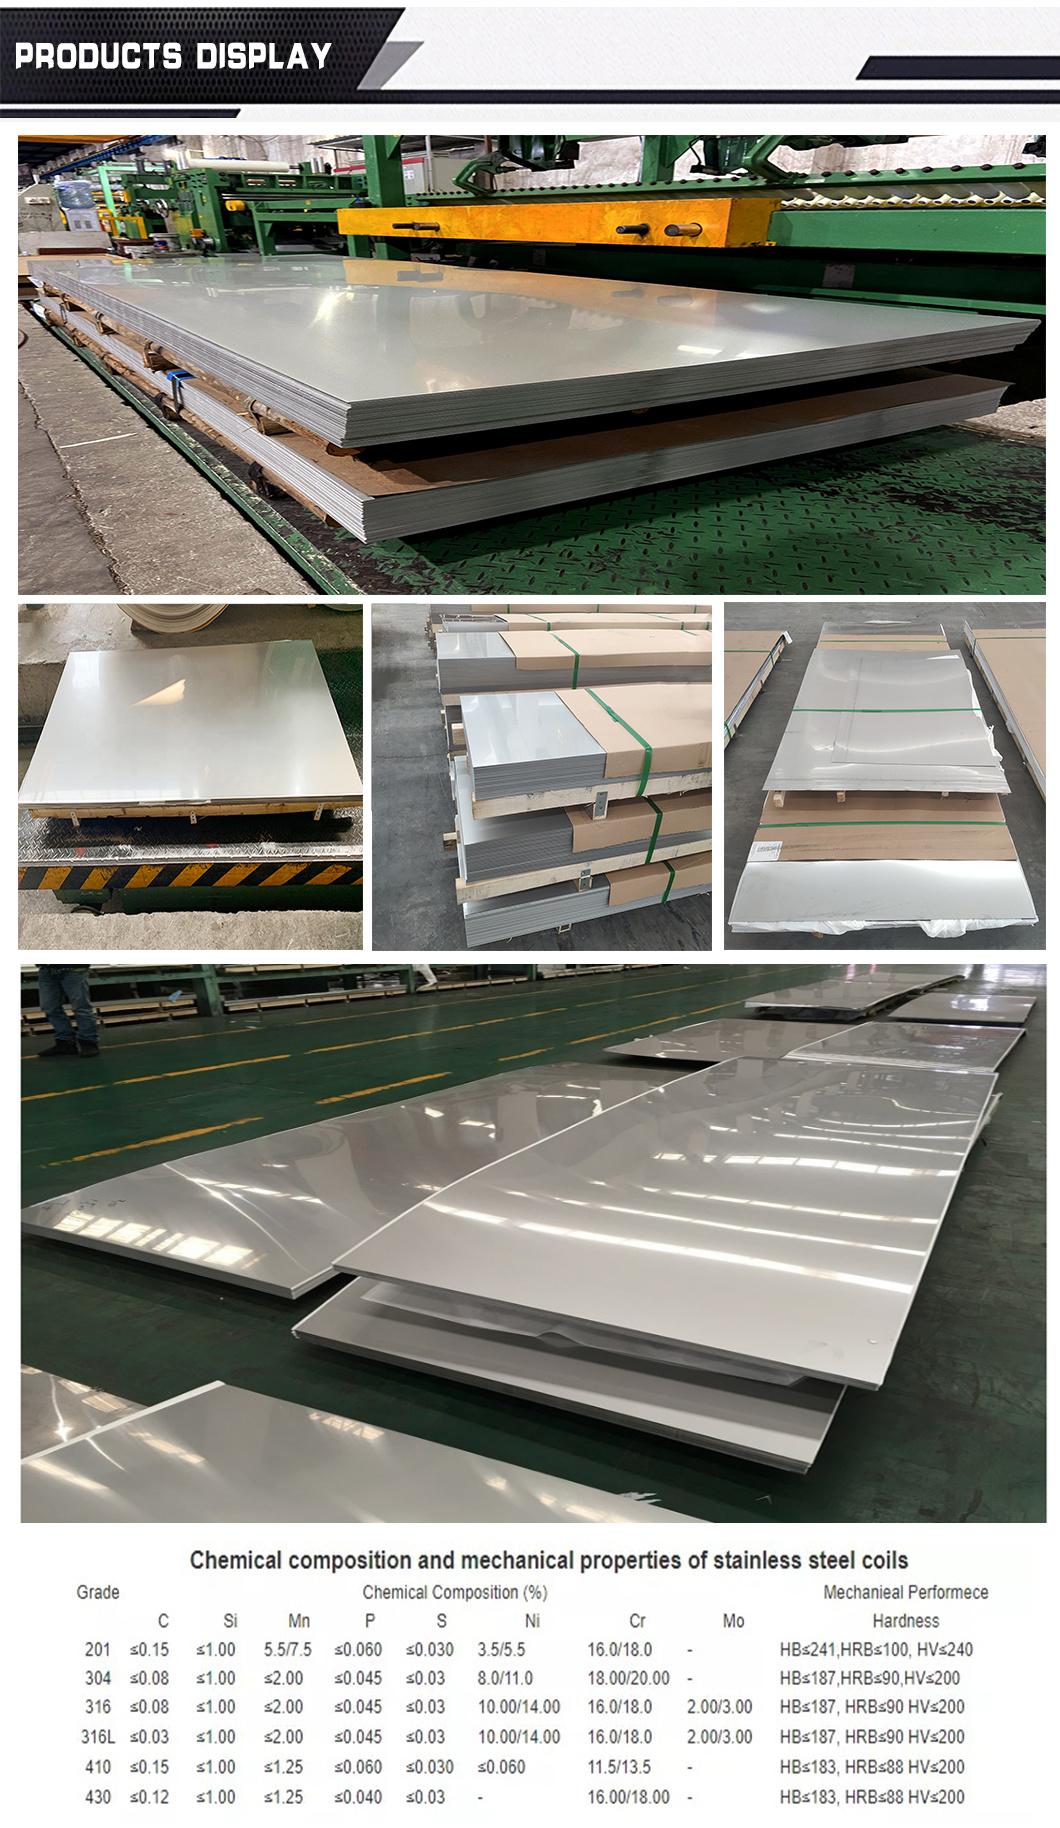 Manufacturer Stainless Steel Sheet 304/316 Mild Checkered Steel Sheet Chequered Steel Pattern Plate for Platform Usage